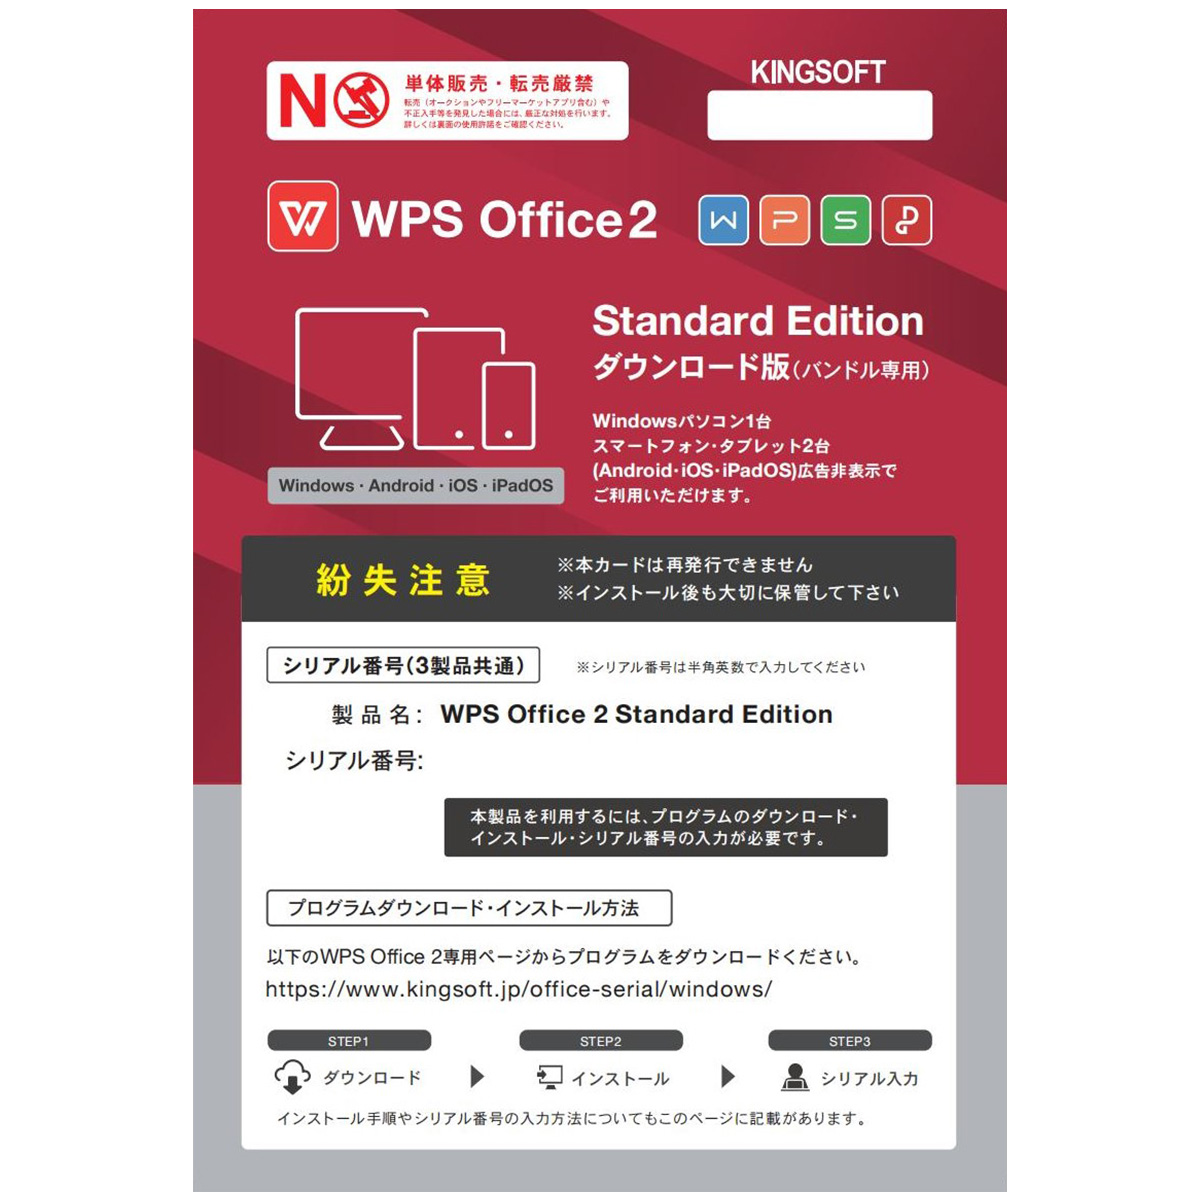 WPS office 2 Standard Edition